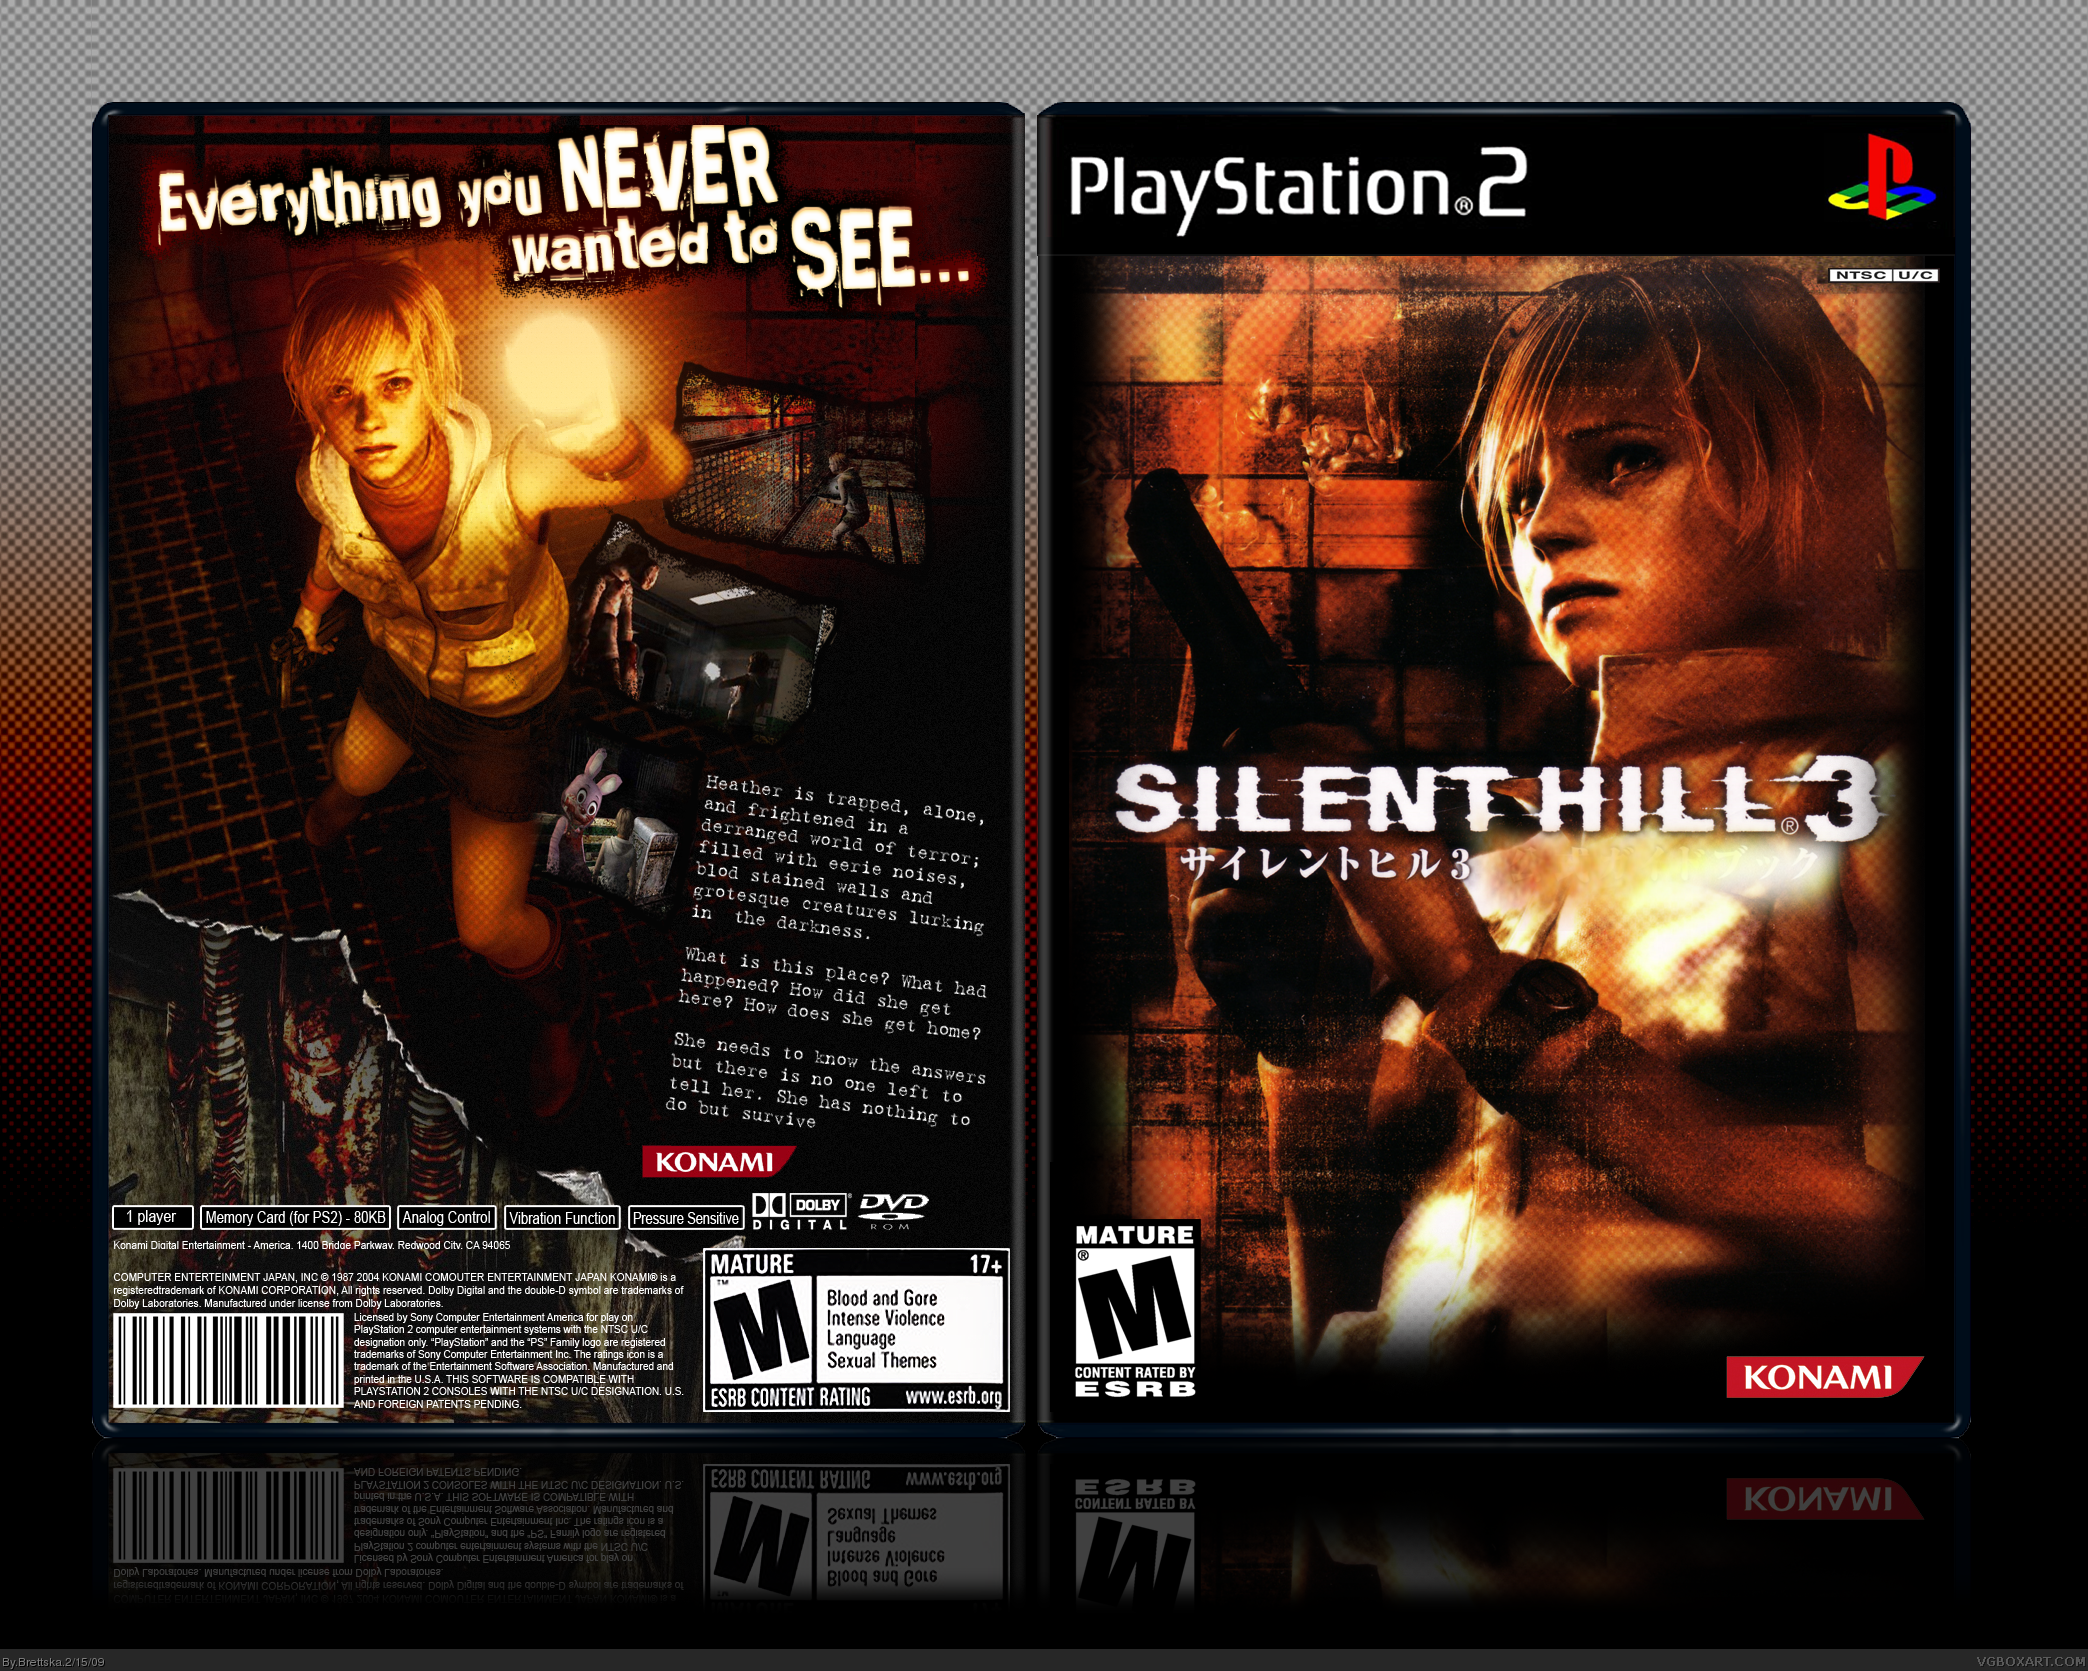 Silent hill director cut. Обложка диска Silent Hill 3 ps2.